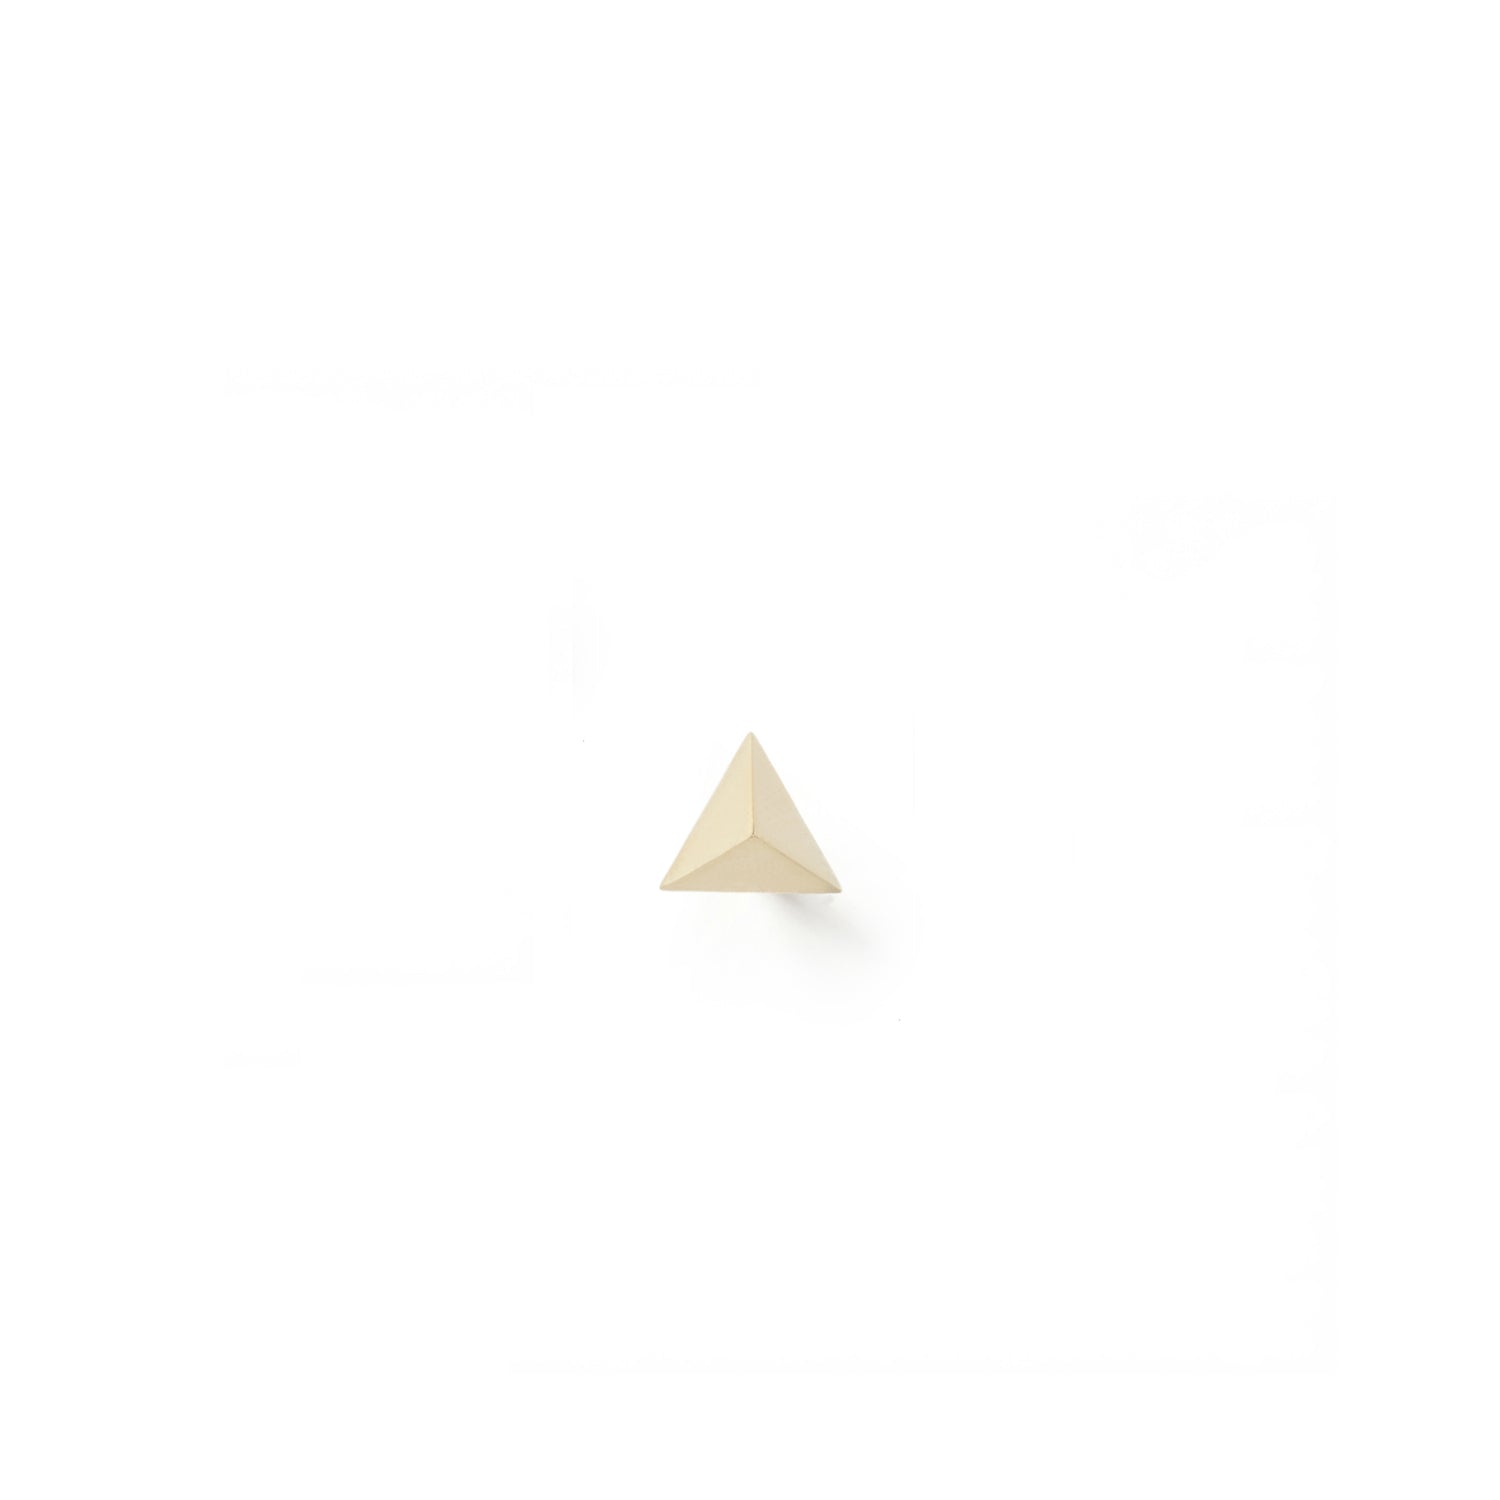 Single Tetrahedron Stud Earring - 9k Yellow Gold